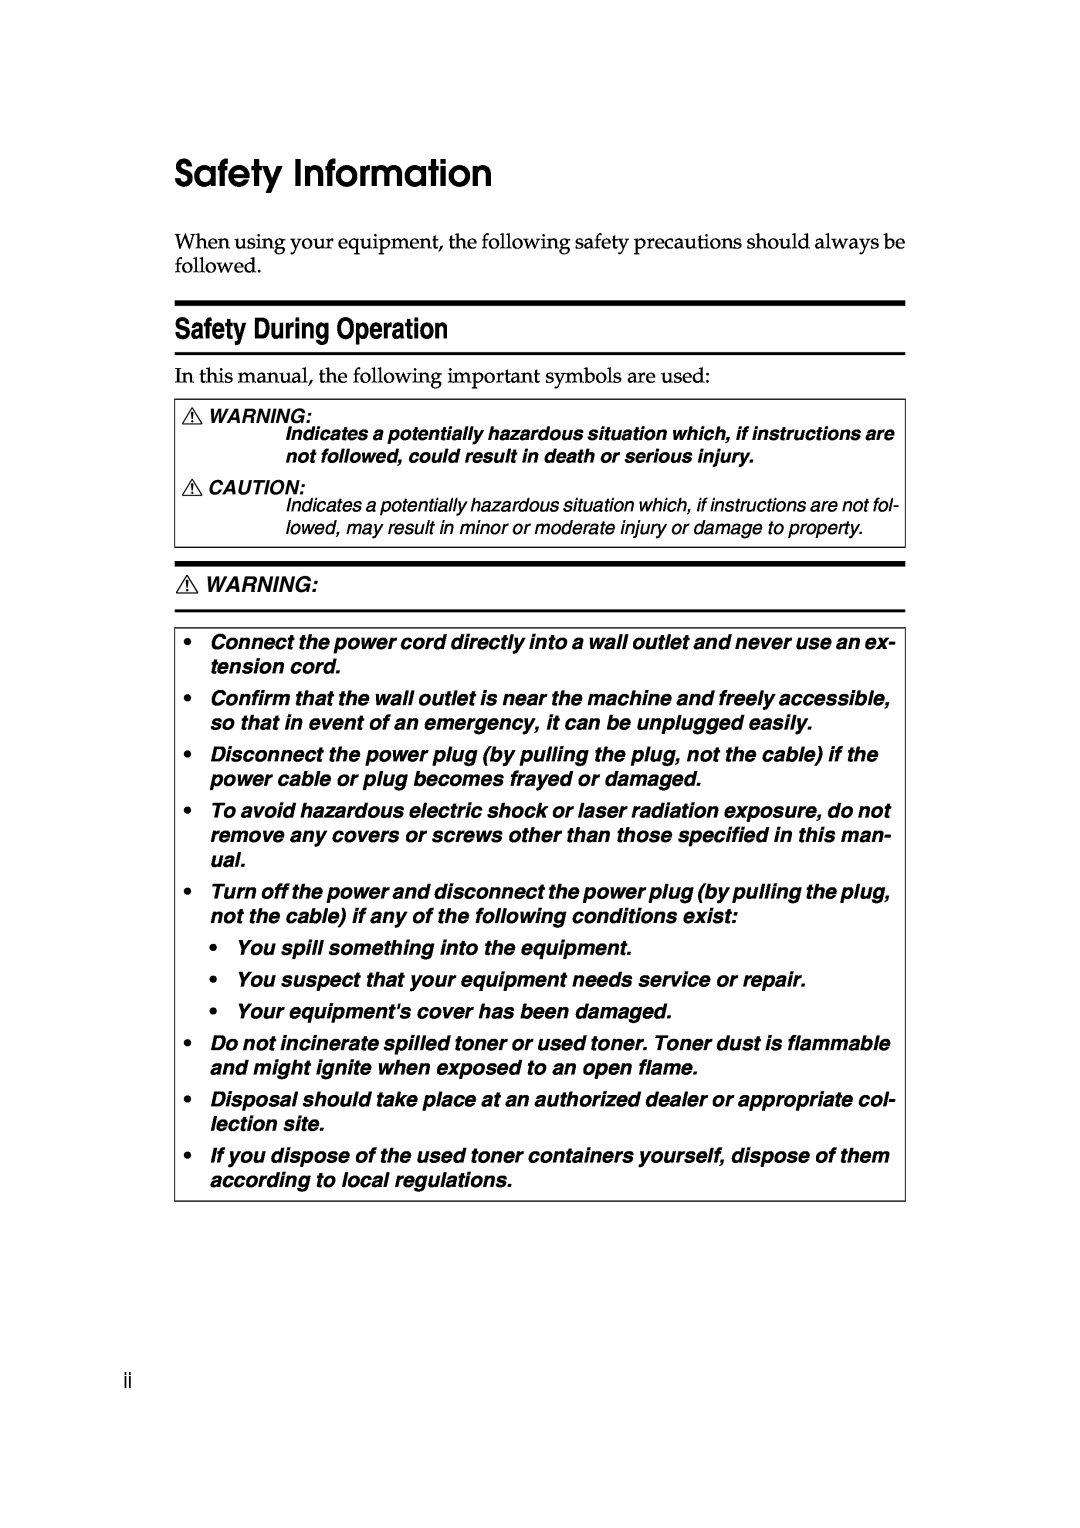 Lanier AP206 manual Safety Information, Safety During Operation, R Warning 